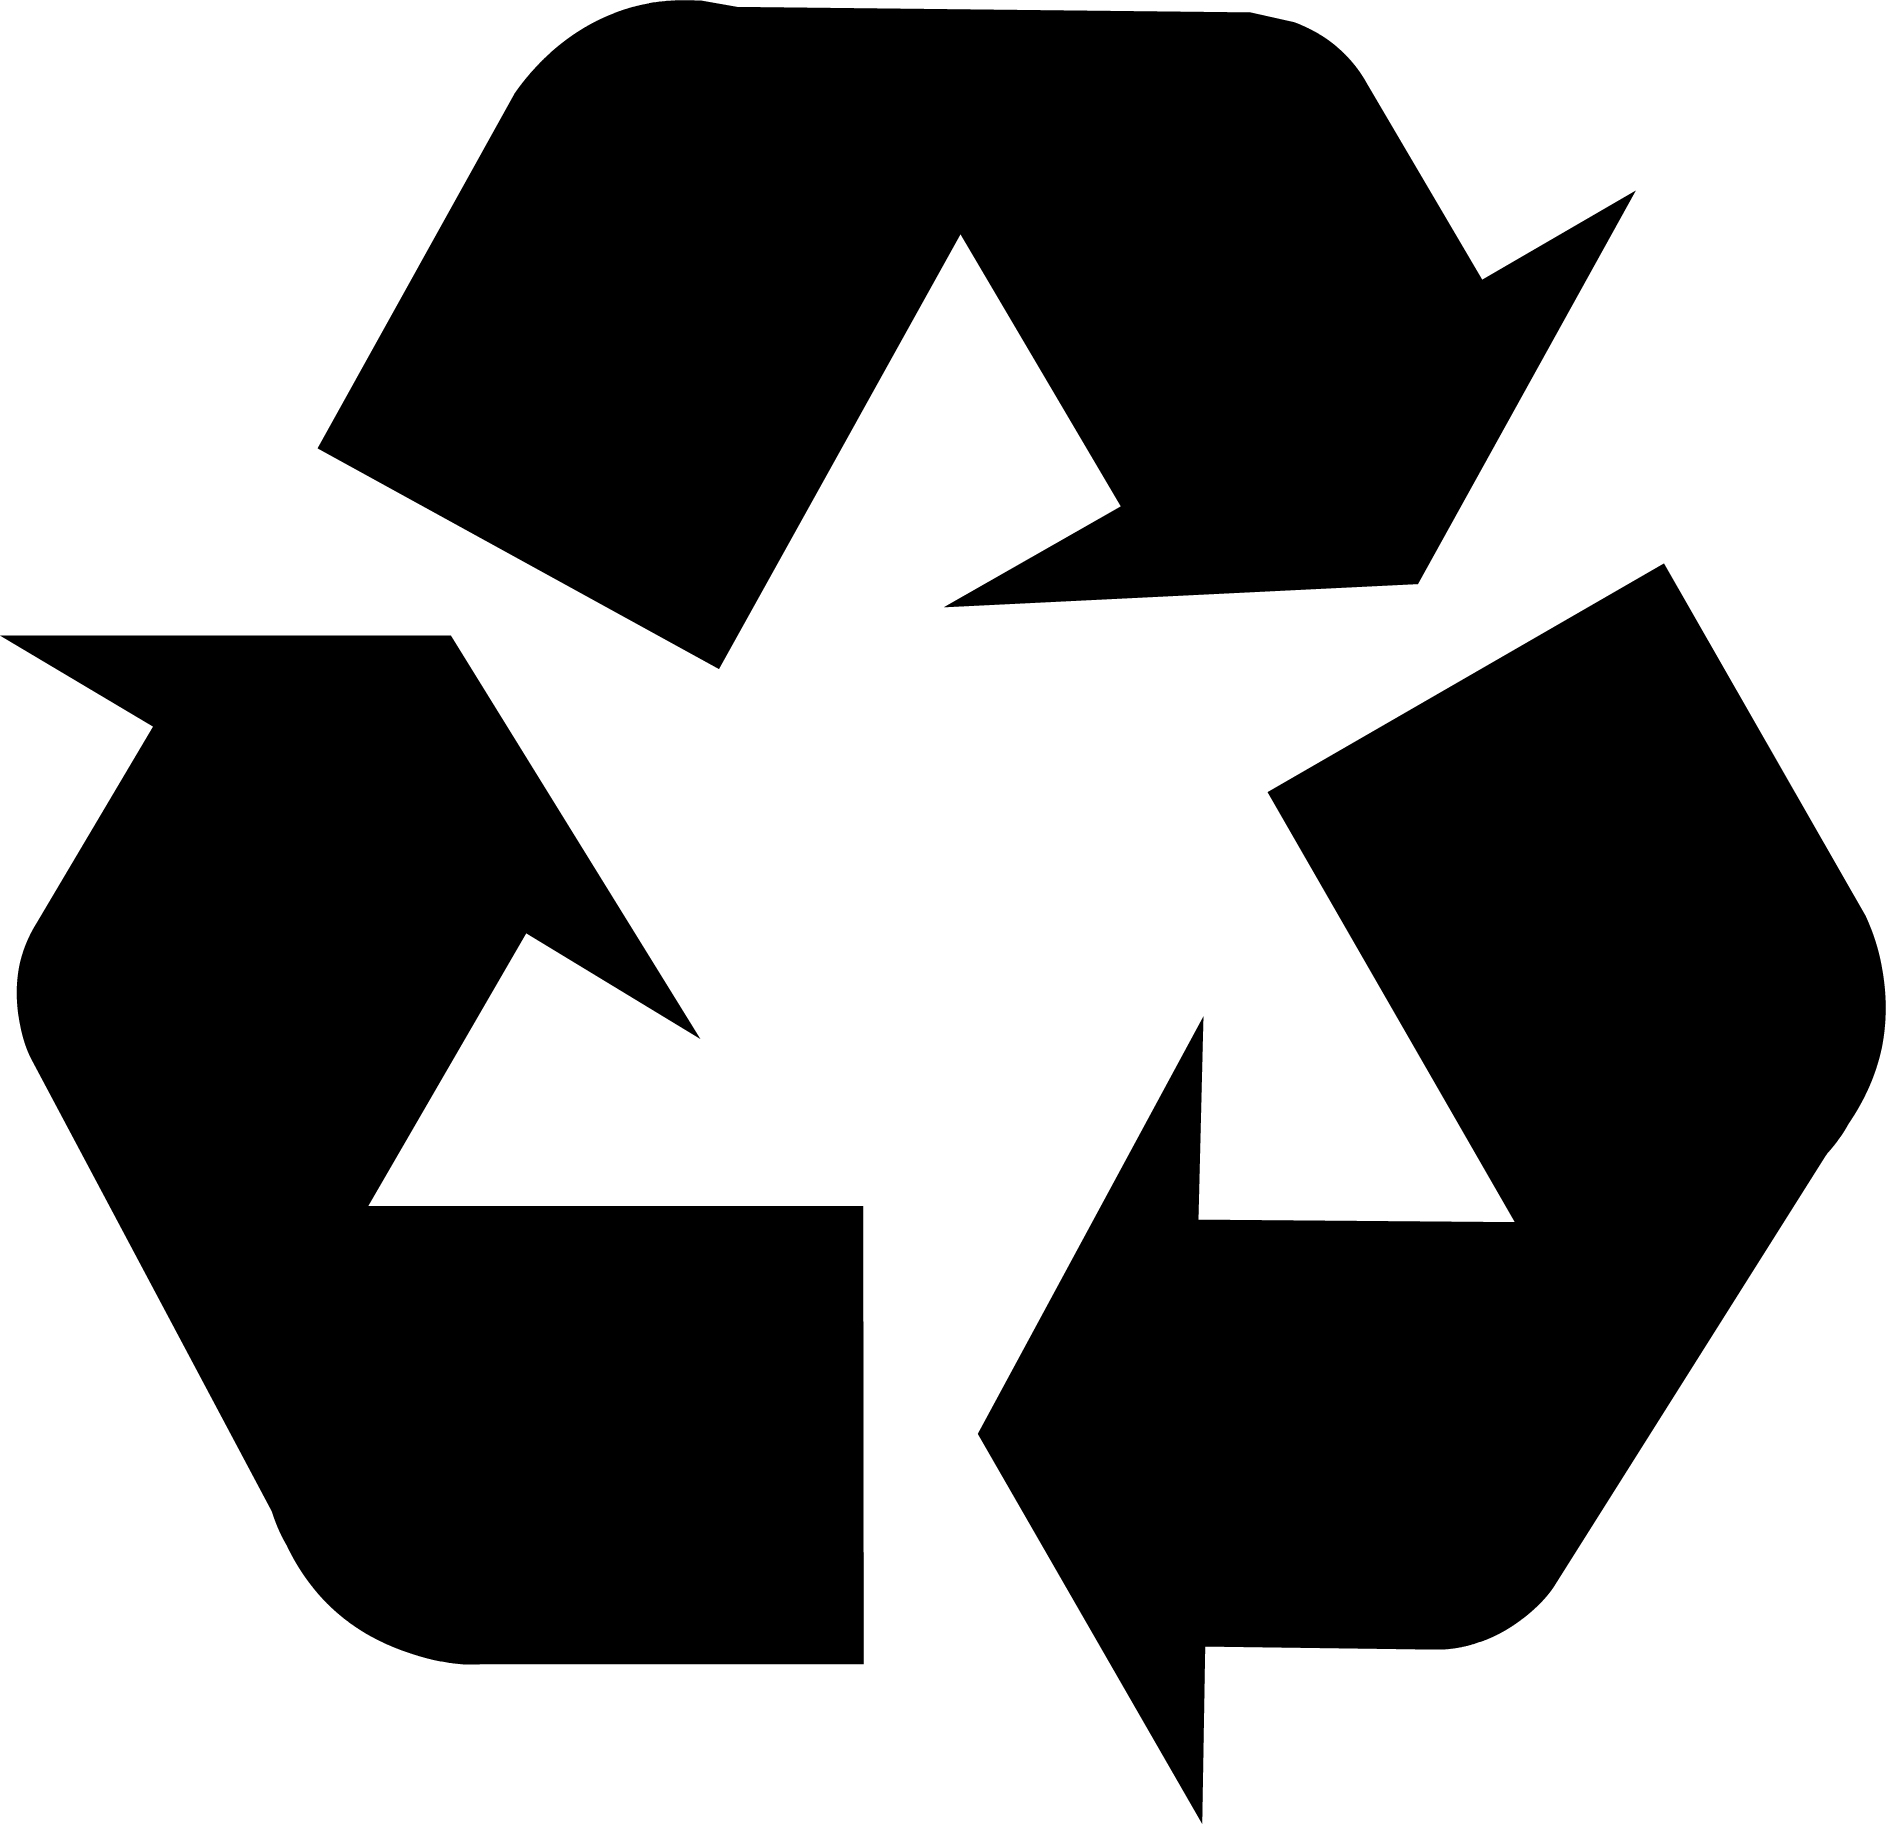 Black-Recycling-Symbol-U267B-rhOGTu.jpg